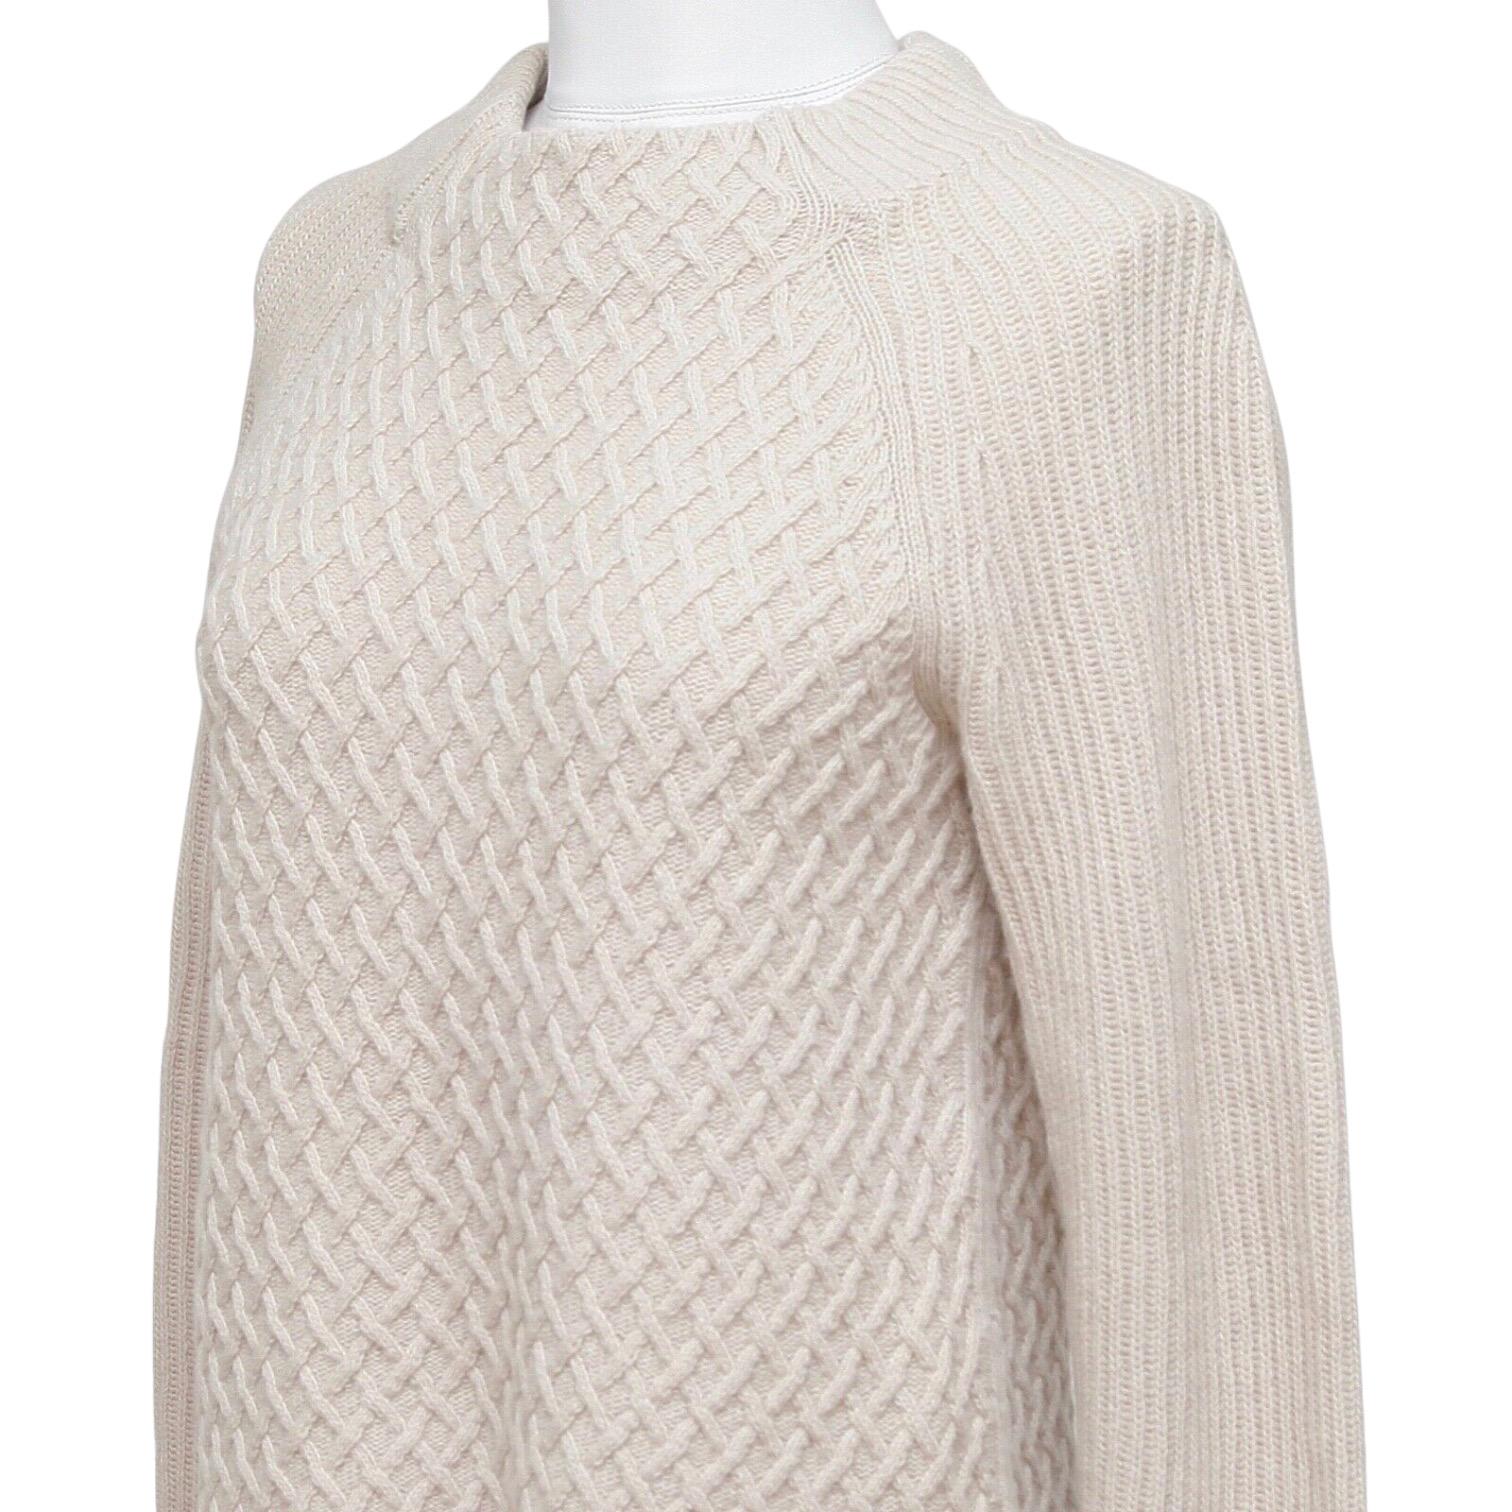 MAX MARA Knit Sweater Beige Long Sleeve Moc Turtleneck Pullover Sz S For Sale 1